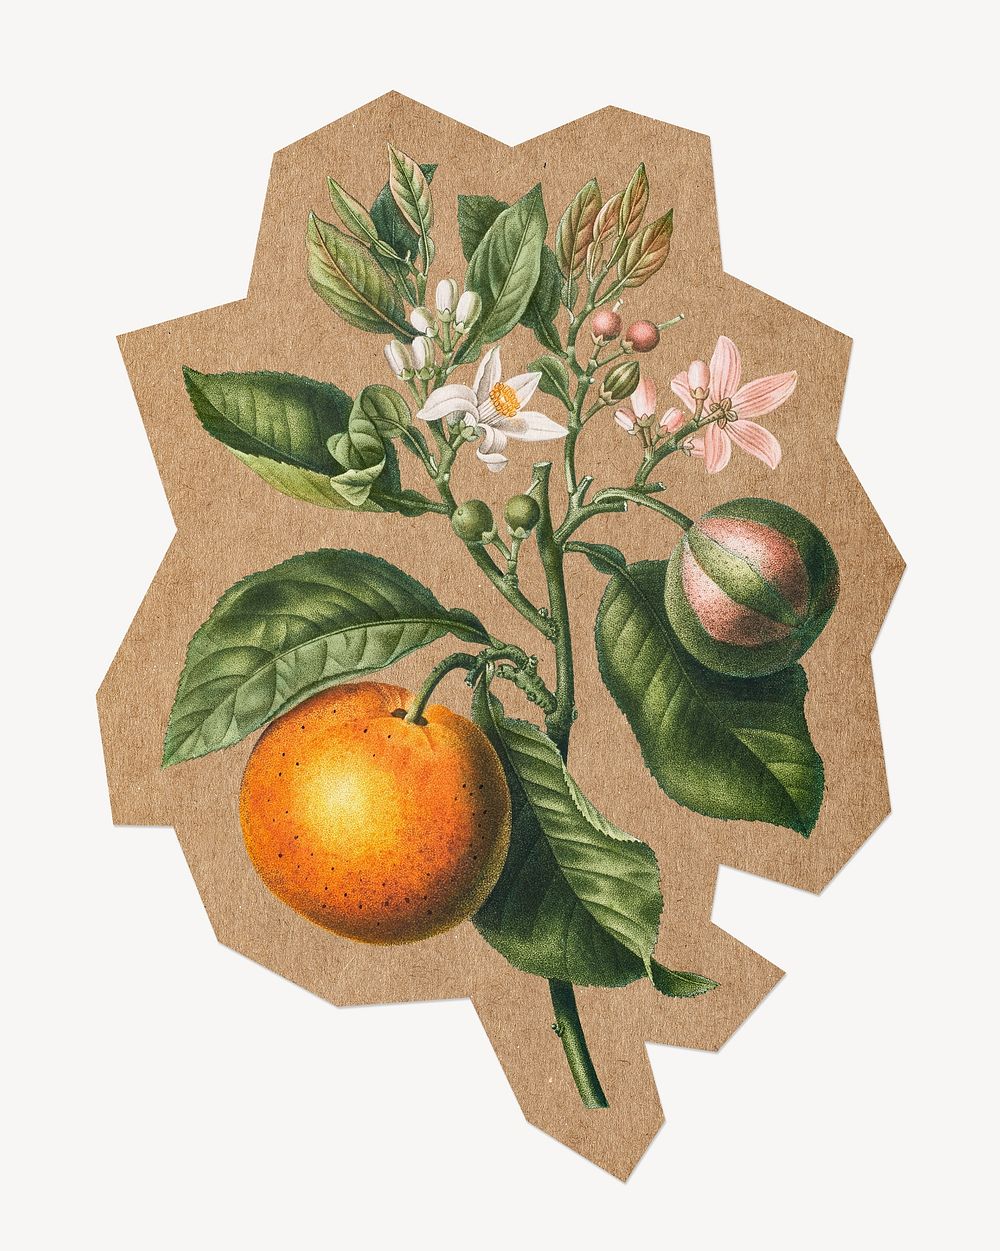 Bitter sweet orange, cut out paper element. Artwork from Pierre Joseph Redouté remixed by rawpixel.